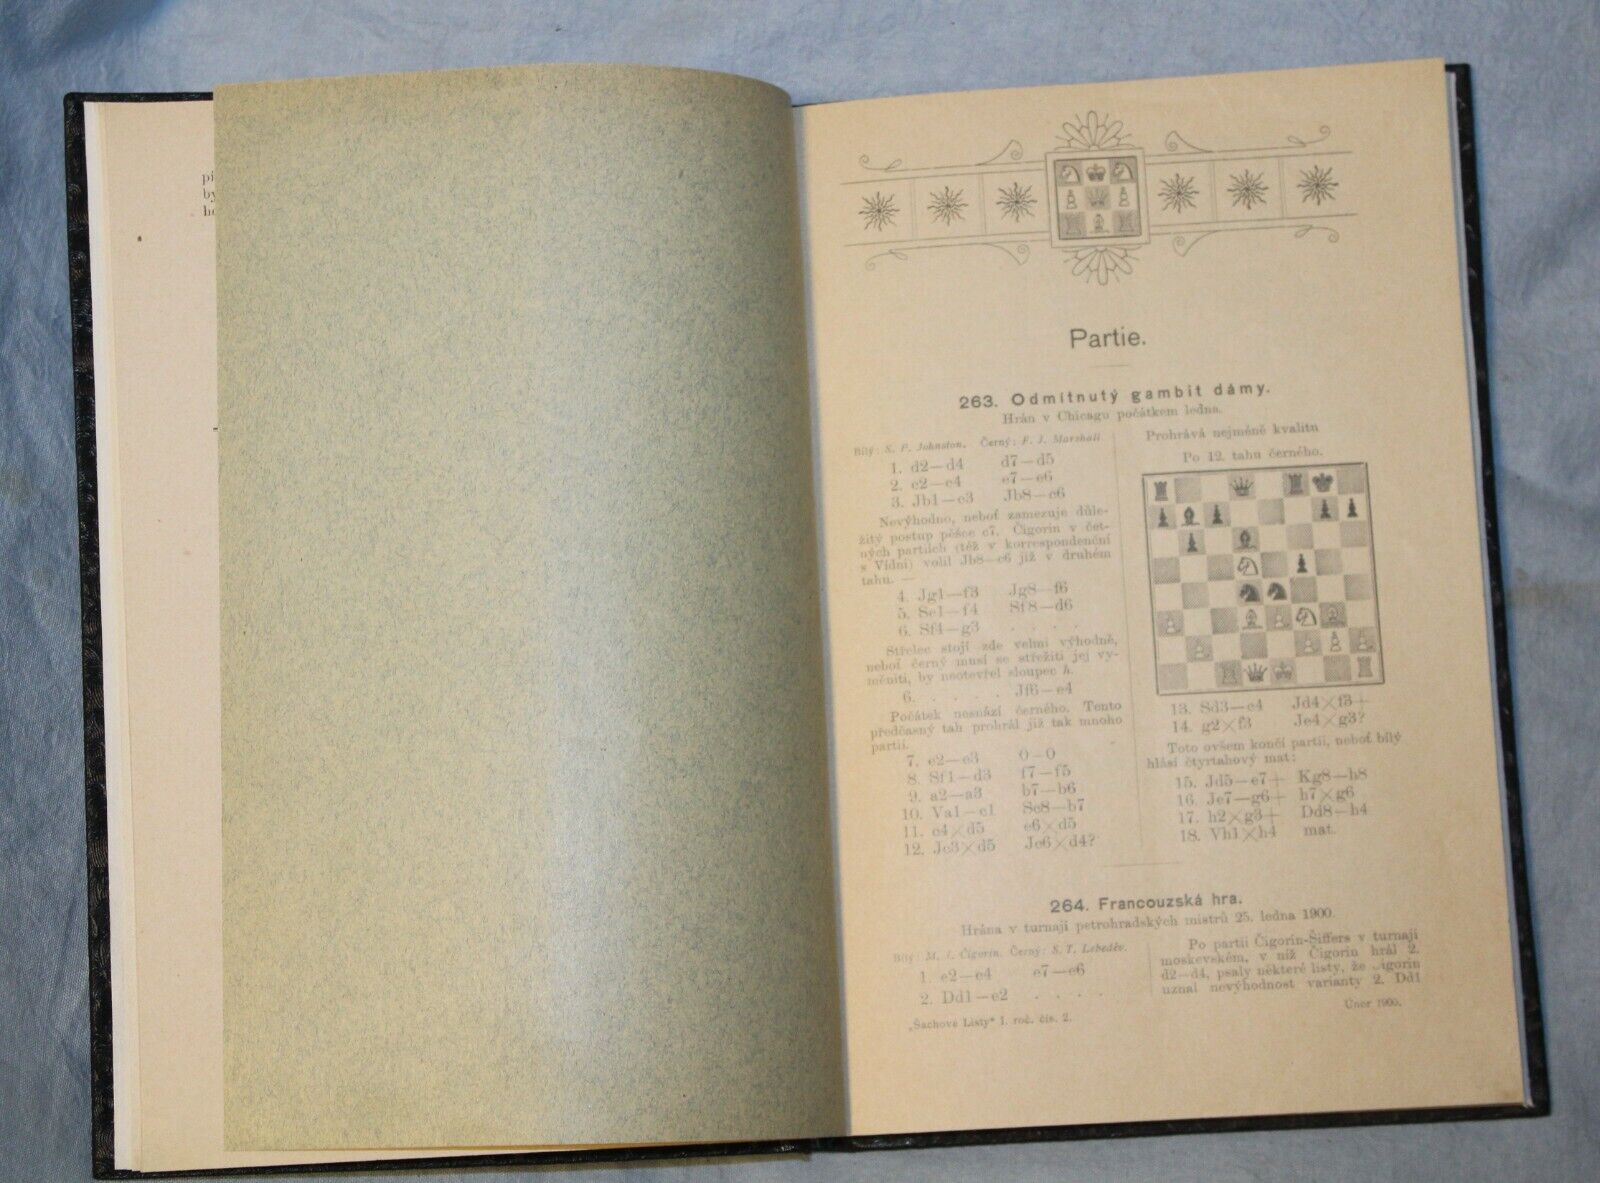 11264.Czech chess magazine:Sachove Listy. All issues.1900-1902.Baturinsky–Karpov lib.